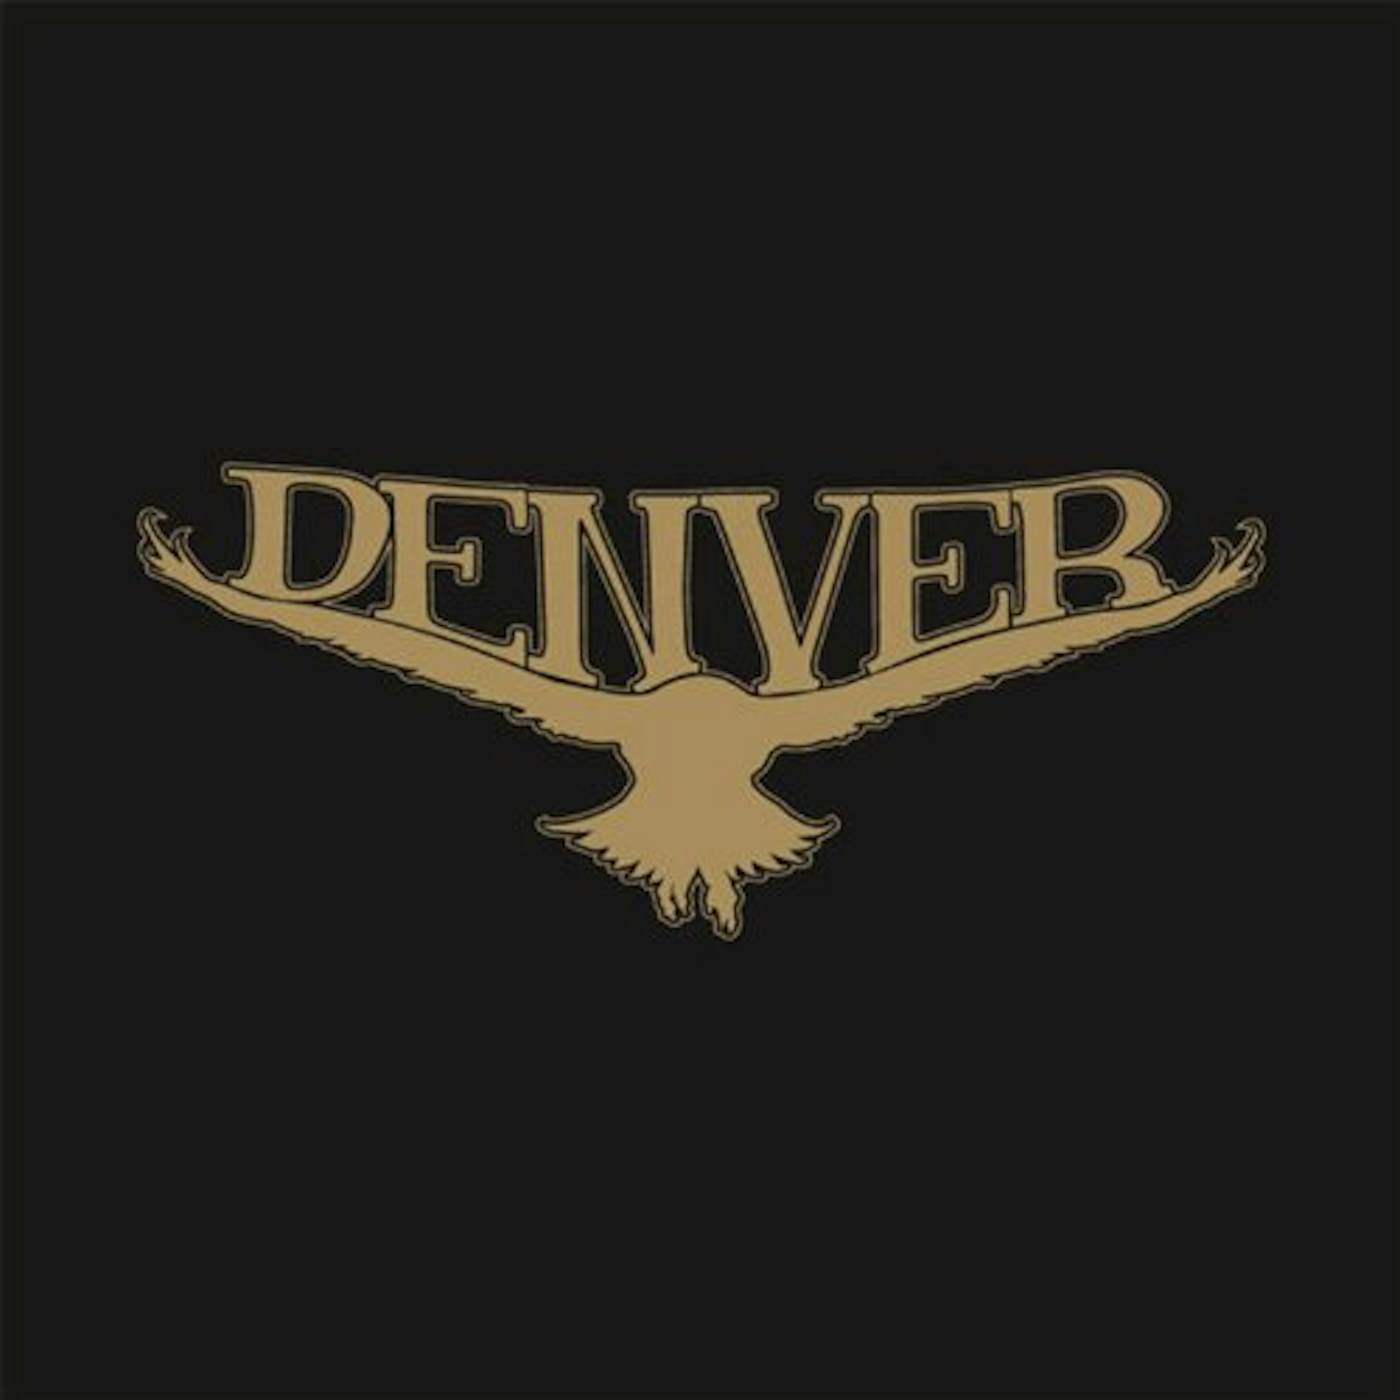 Denver Vinyl Record